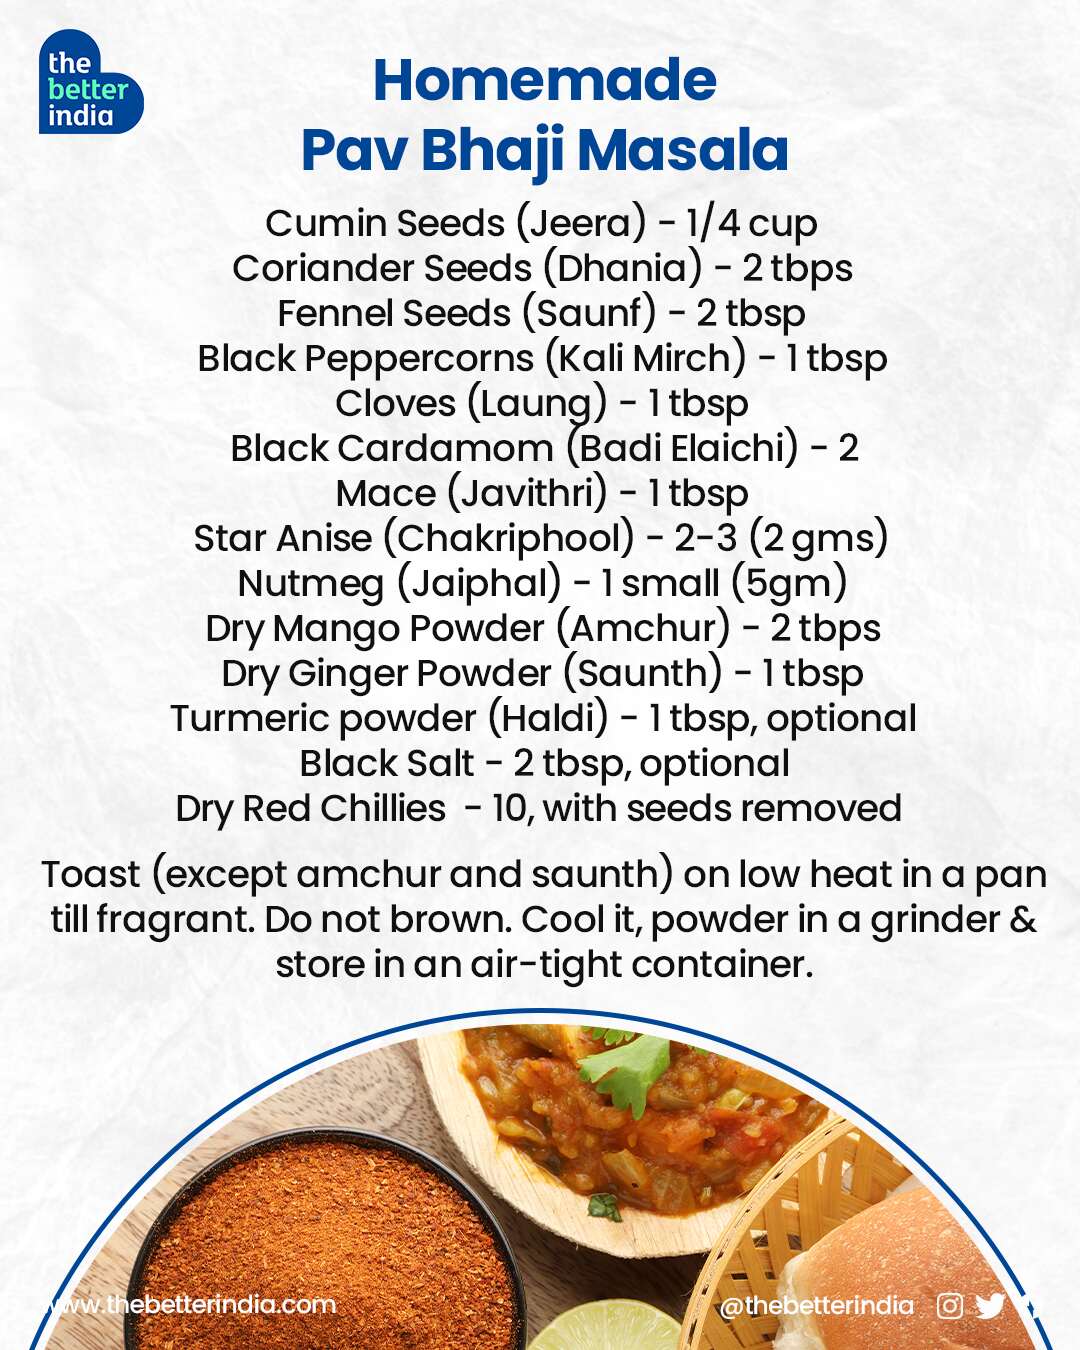 Homemade pav bhaji masala recipe